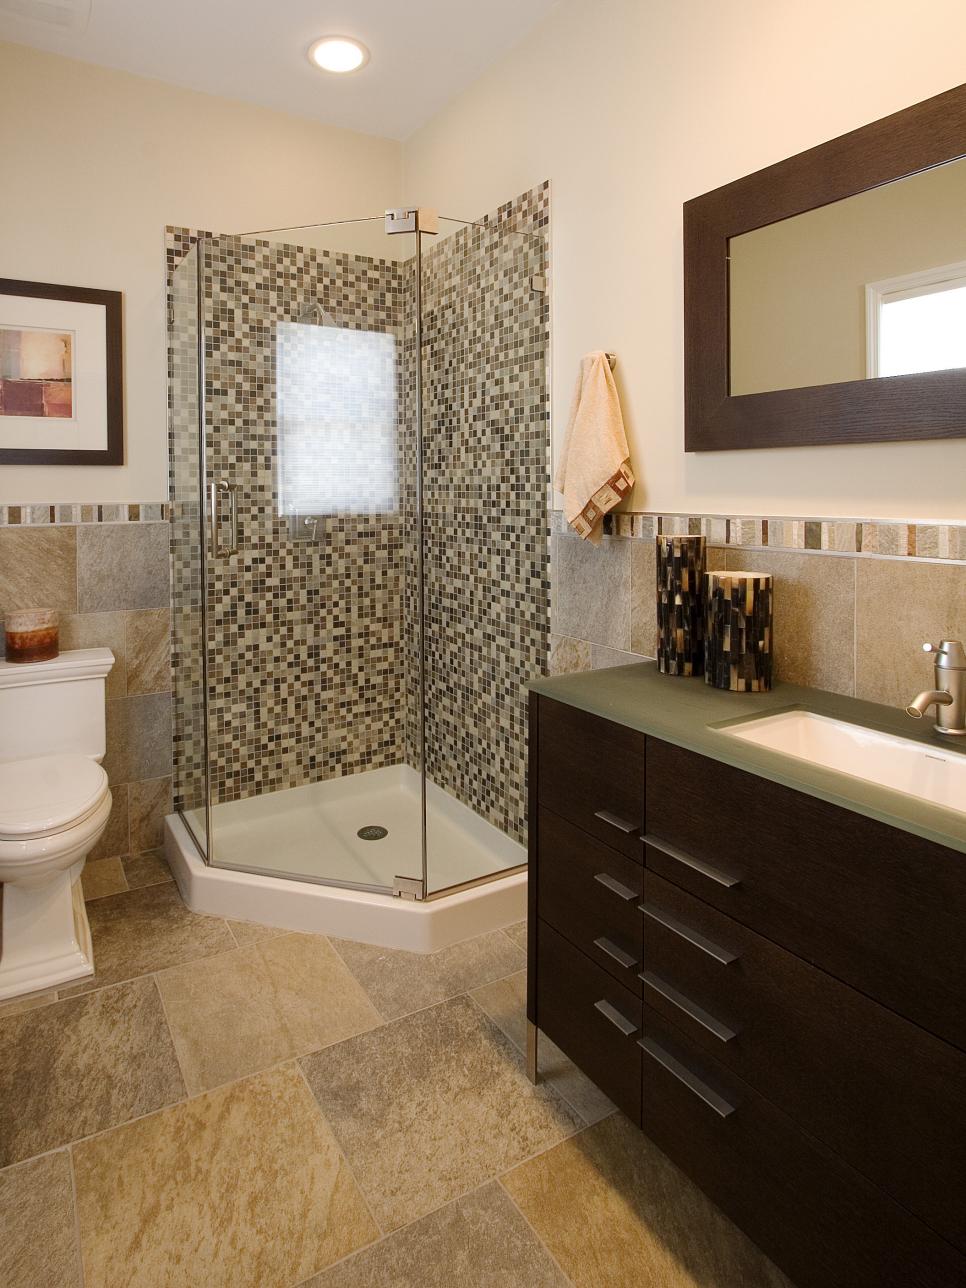 Bright Bathroom With Corner Shower Featuring Mosaic Tile | HGTV